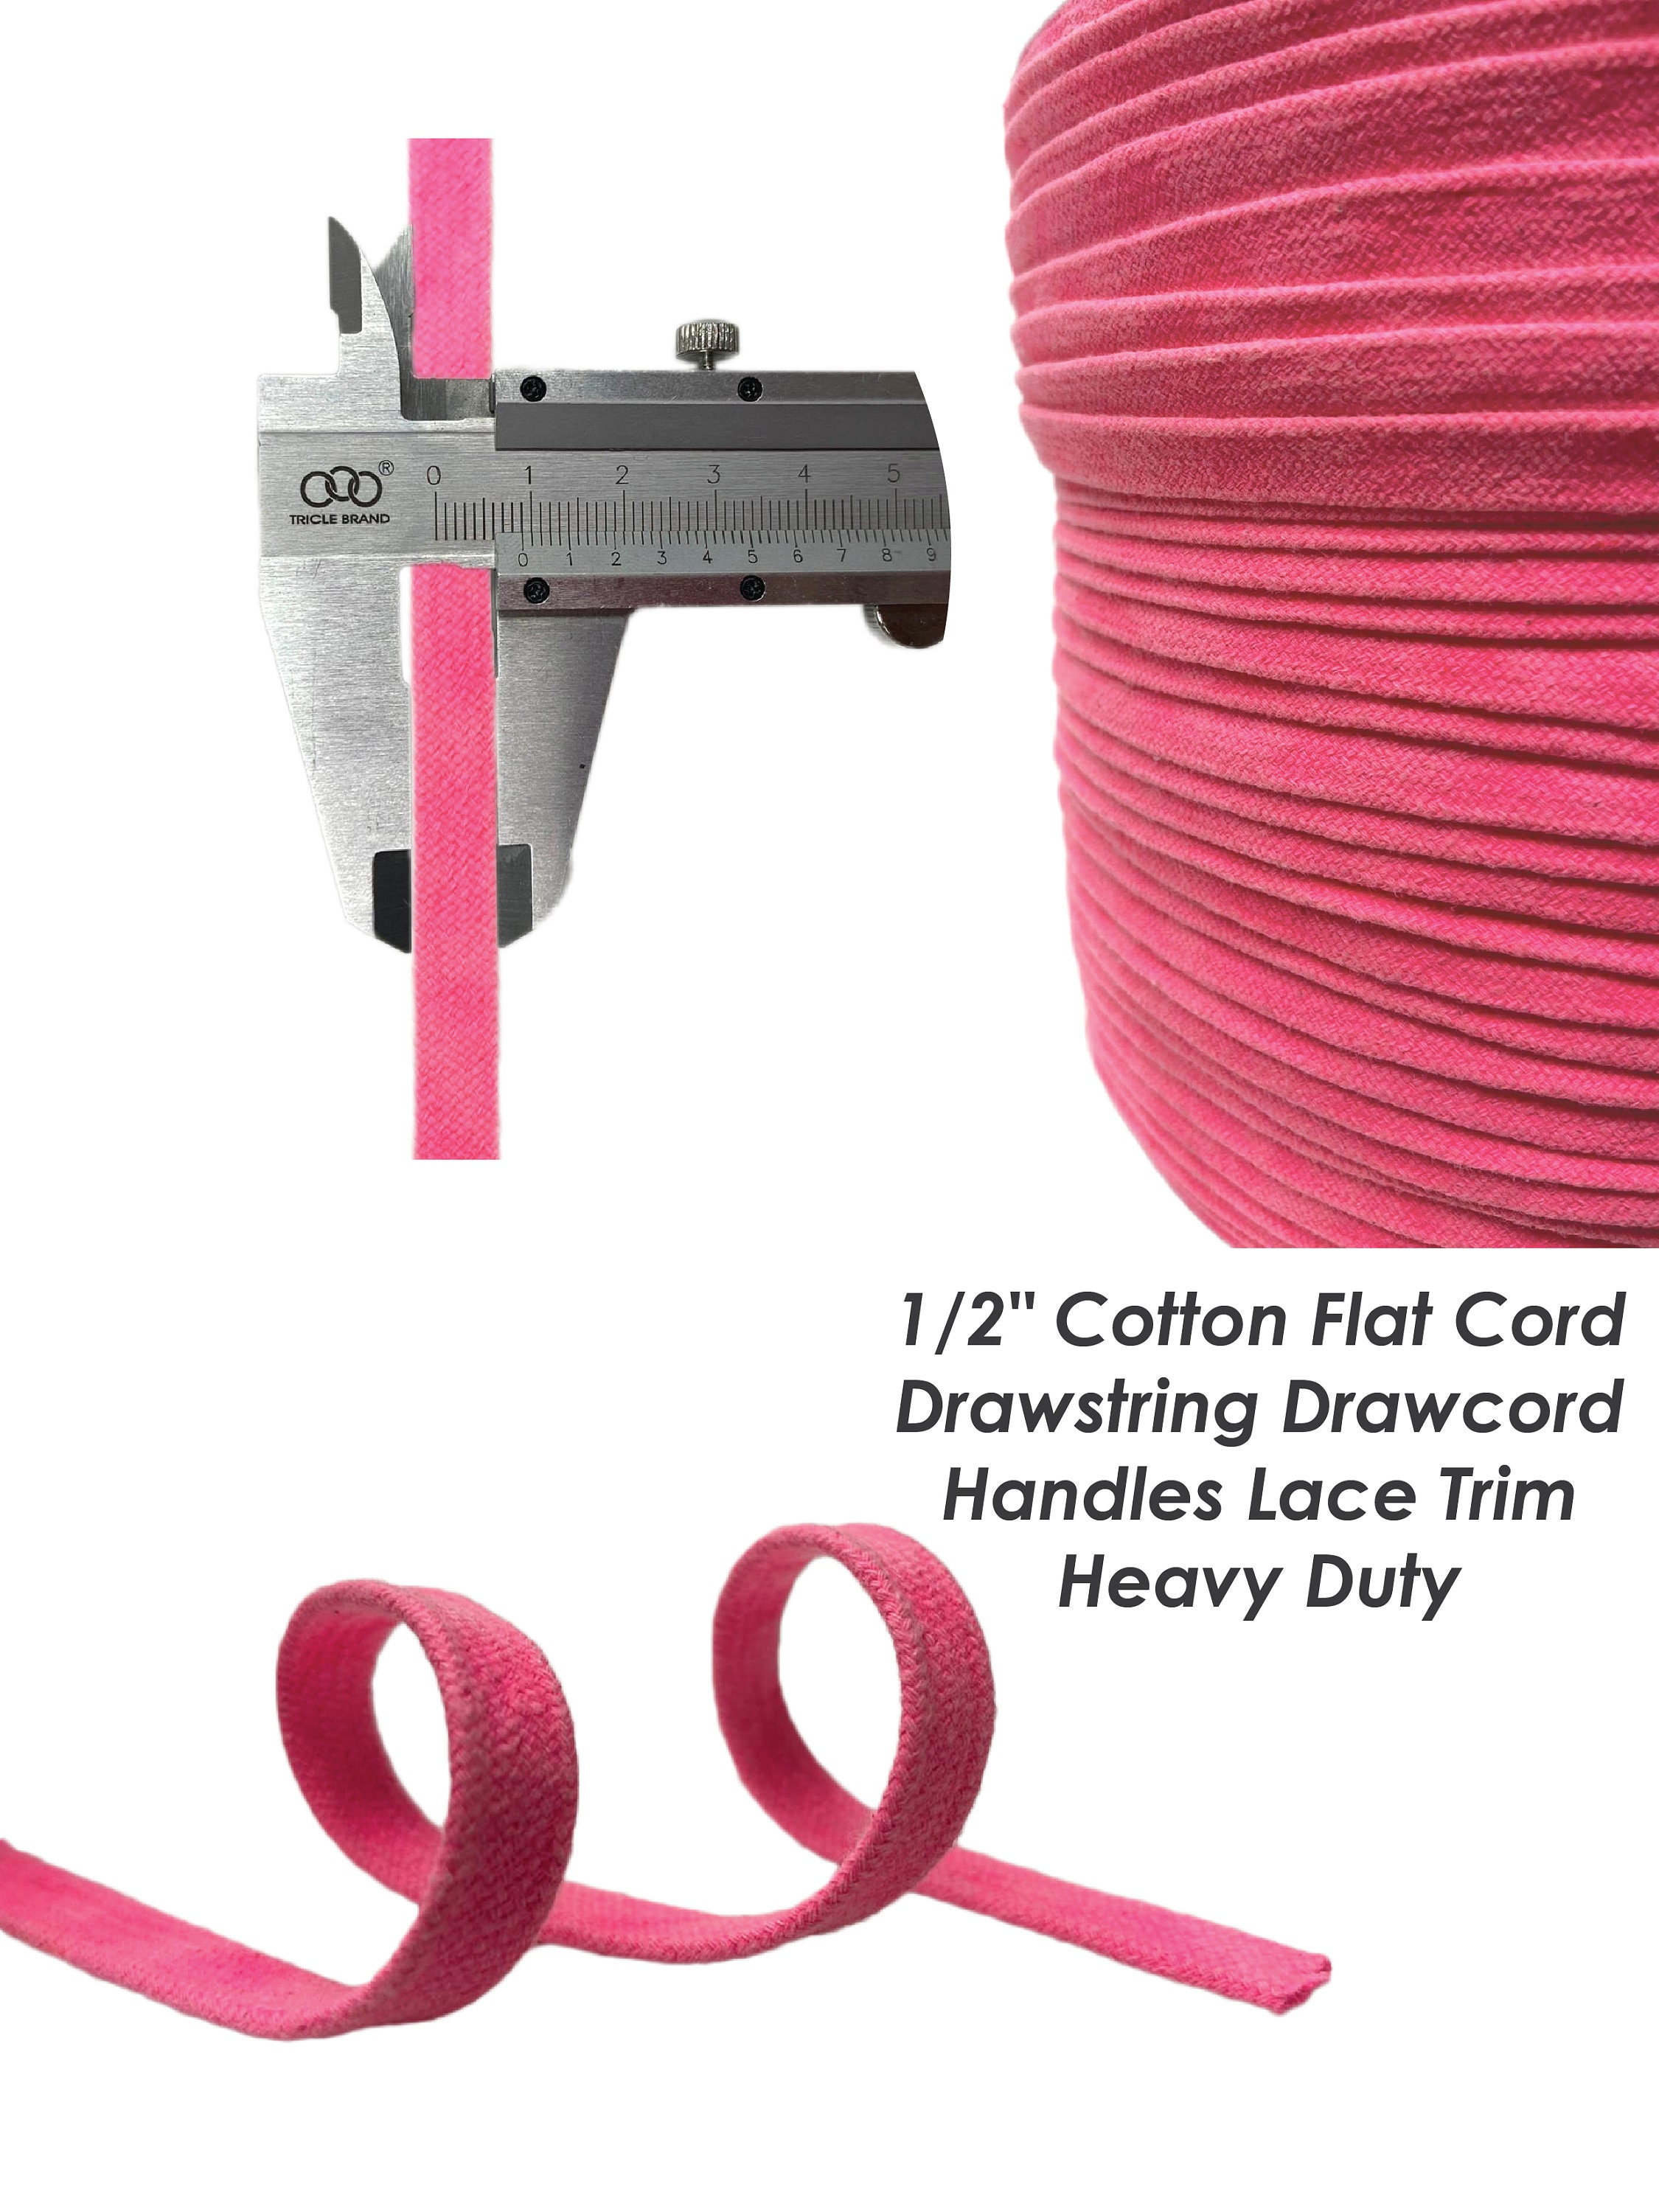 3/8 Cotton Flat Cord Drawstring Drawcord Handles Lace Trim Heavy